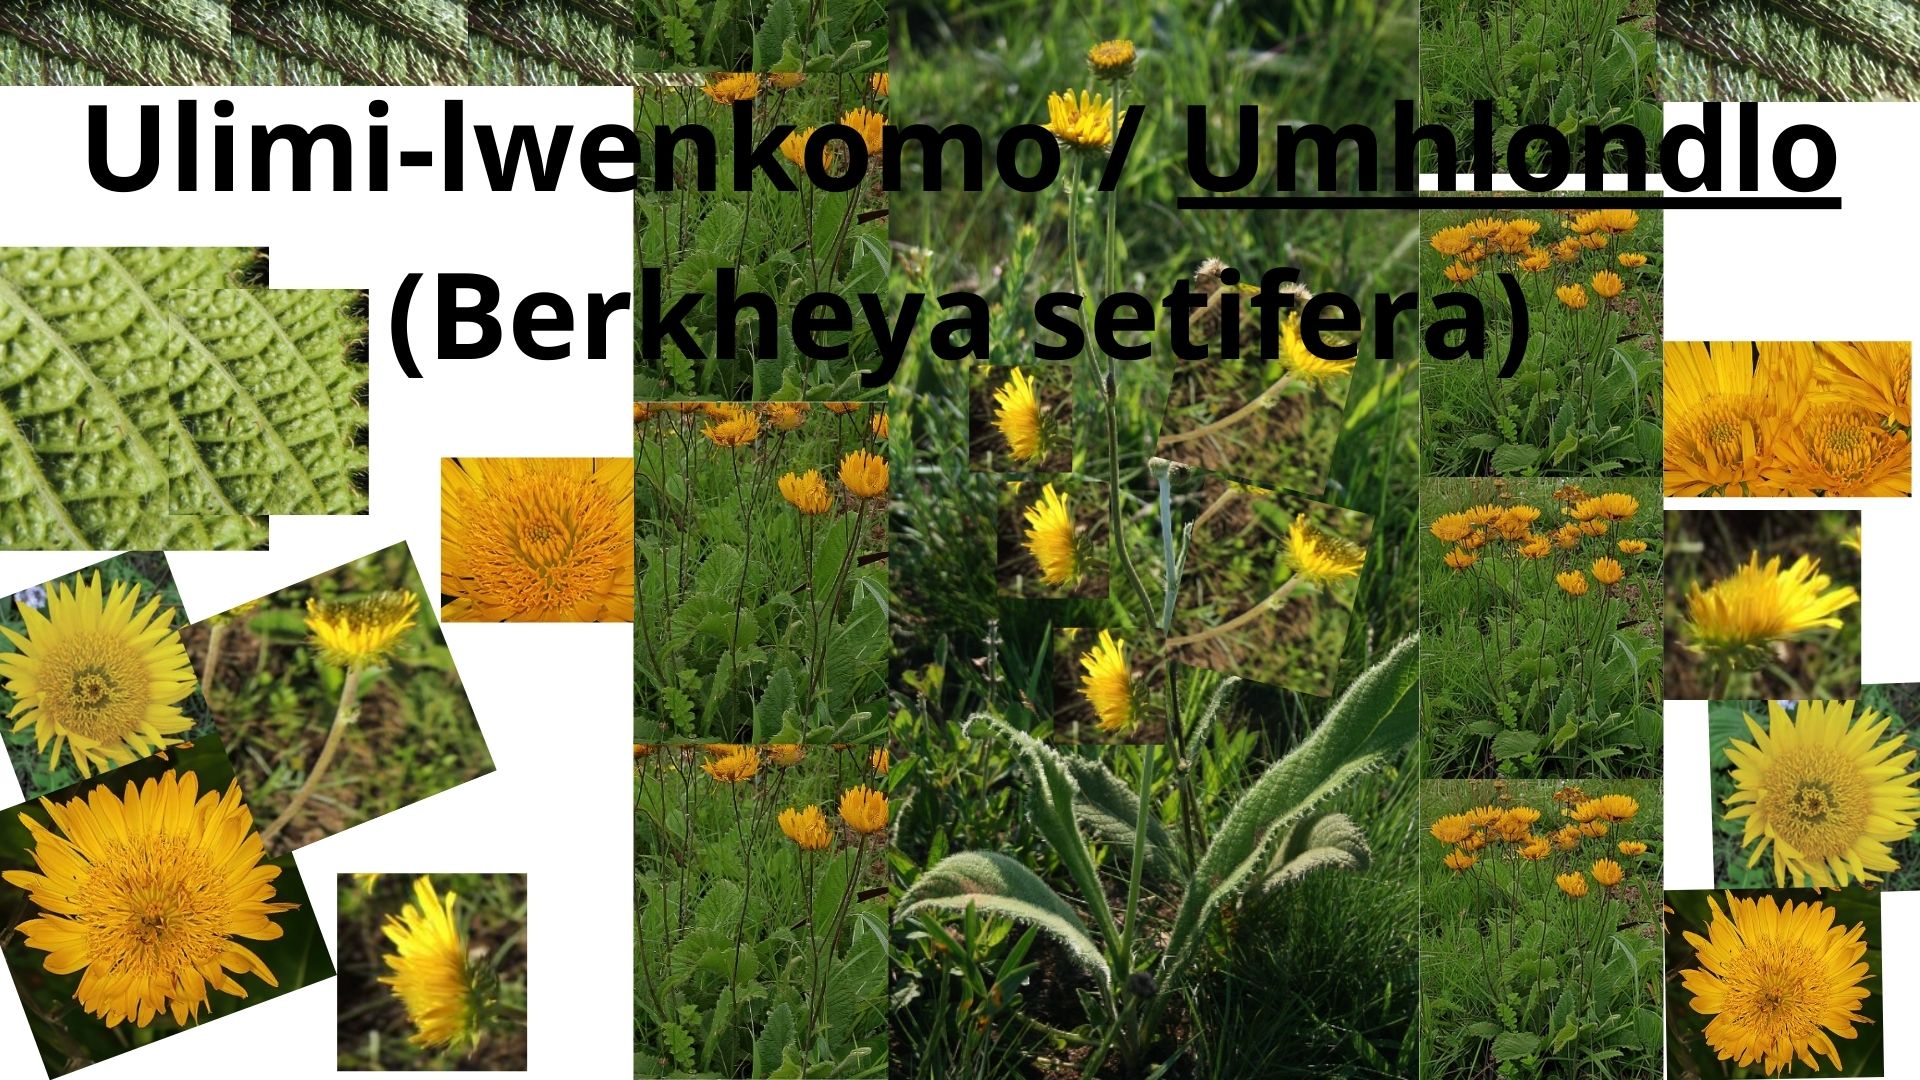 You are currently viewing <strong>Berkheya setifera (Ulimi-lwenkomo)</strong>